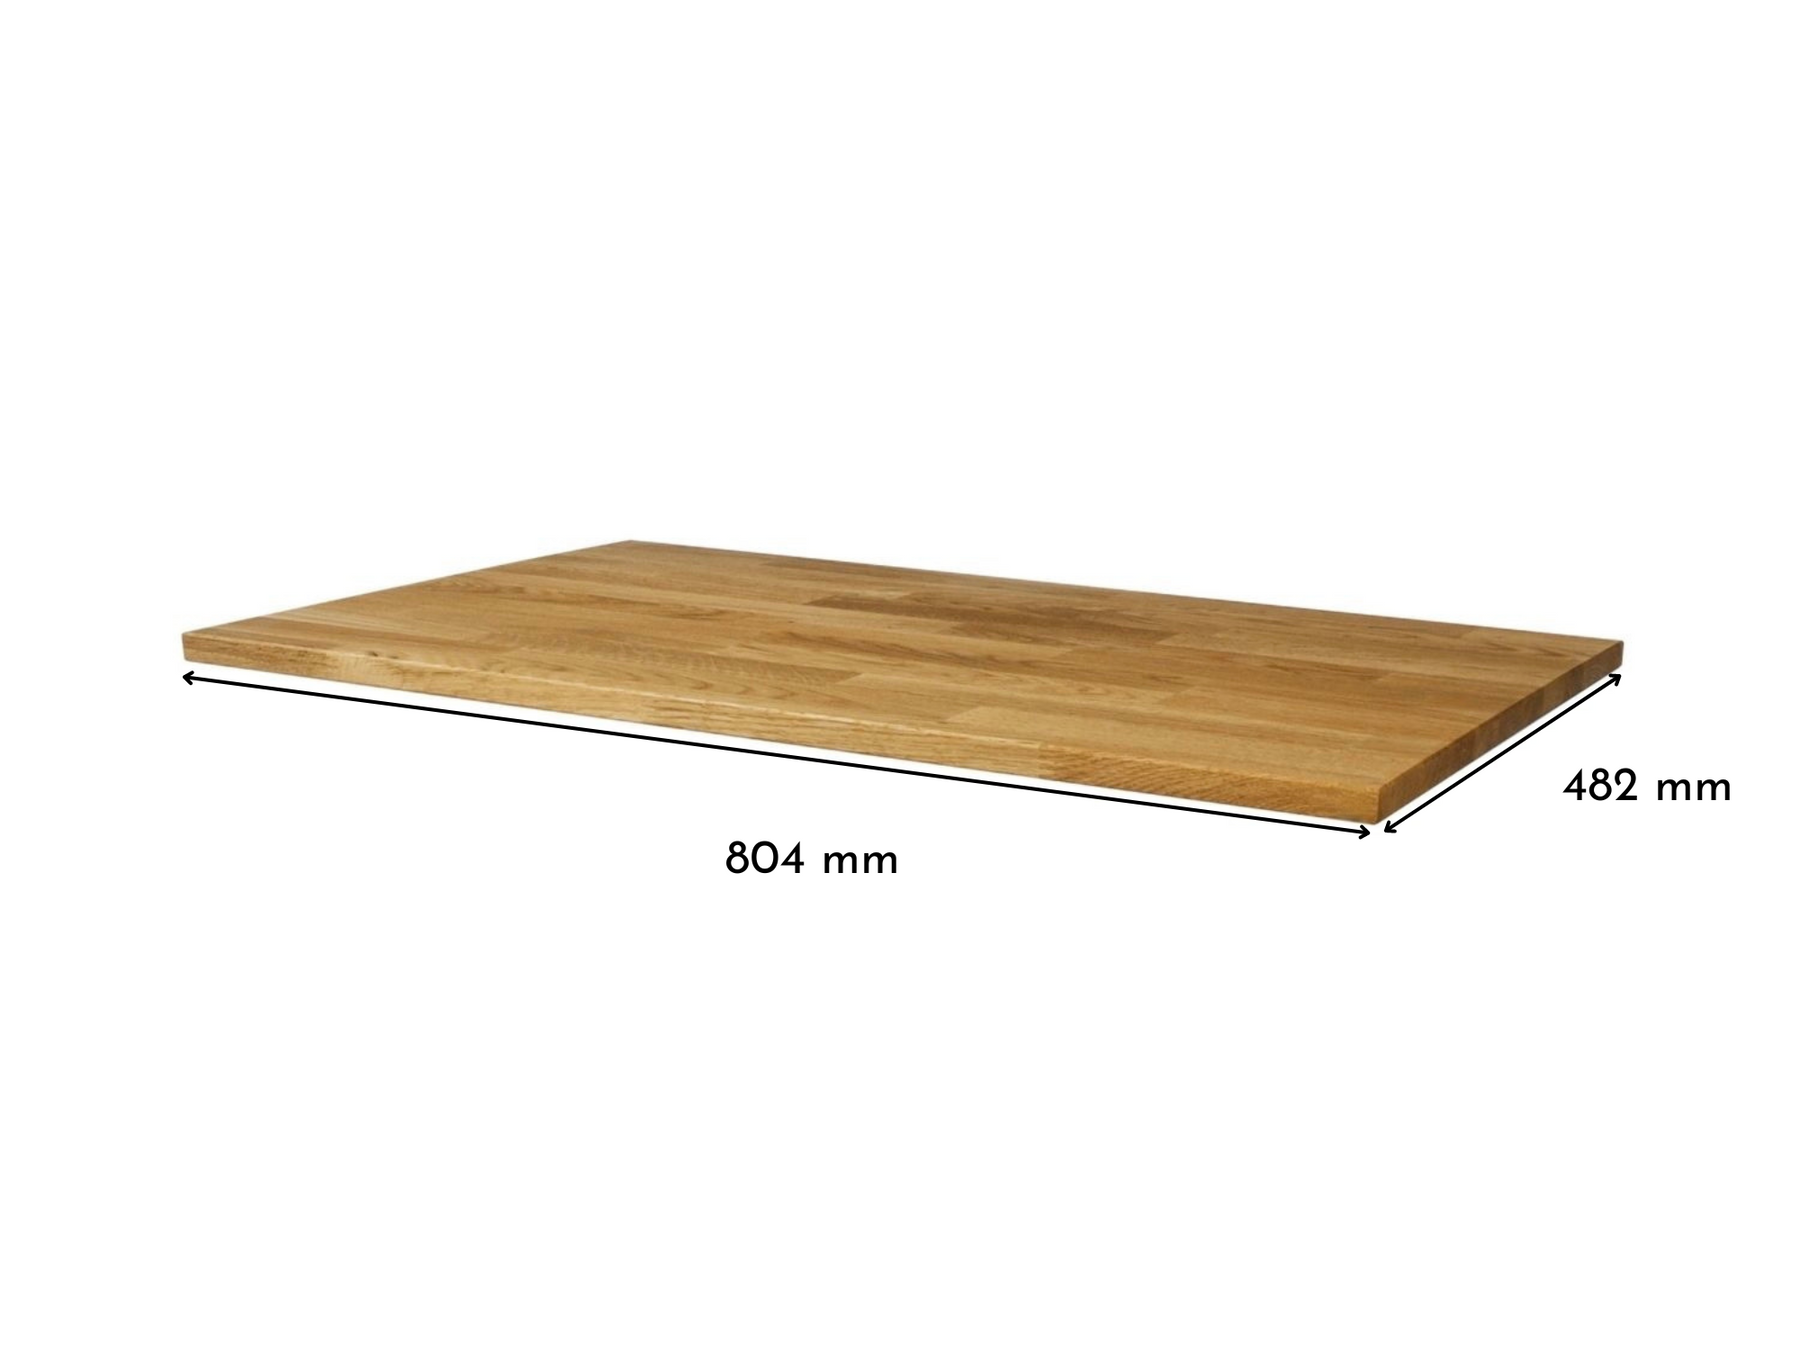 Malm Kommode mit Massivholzdeckplatte aus Eiche Natur geölt in 19 mm Stärke mit Bemaßung 804 mm x 482 mm